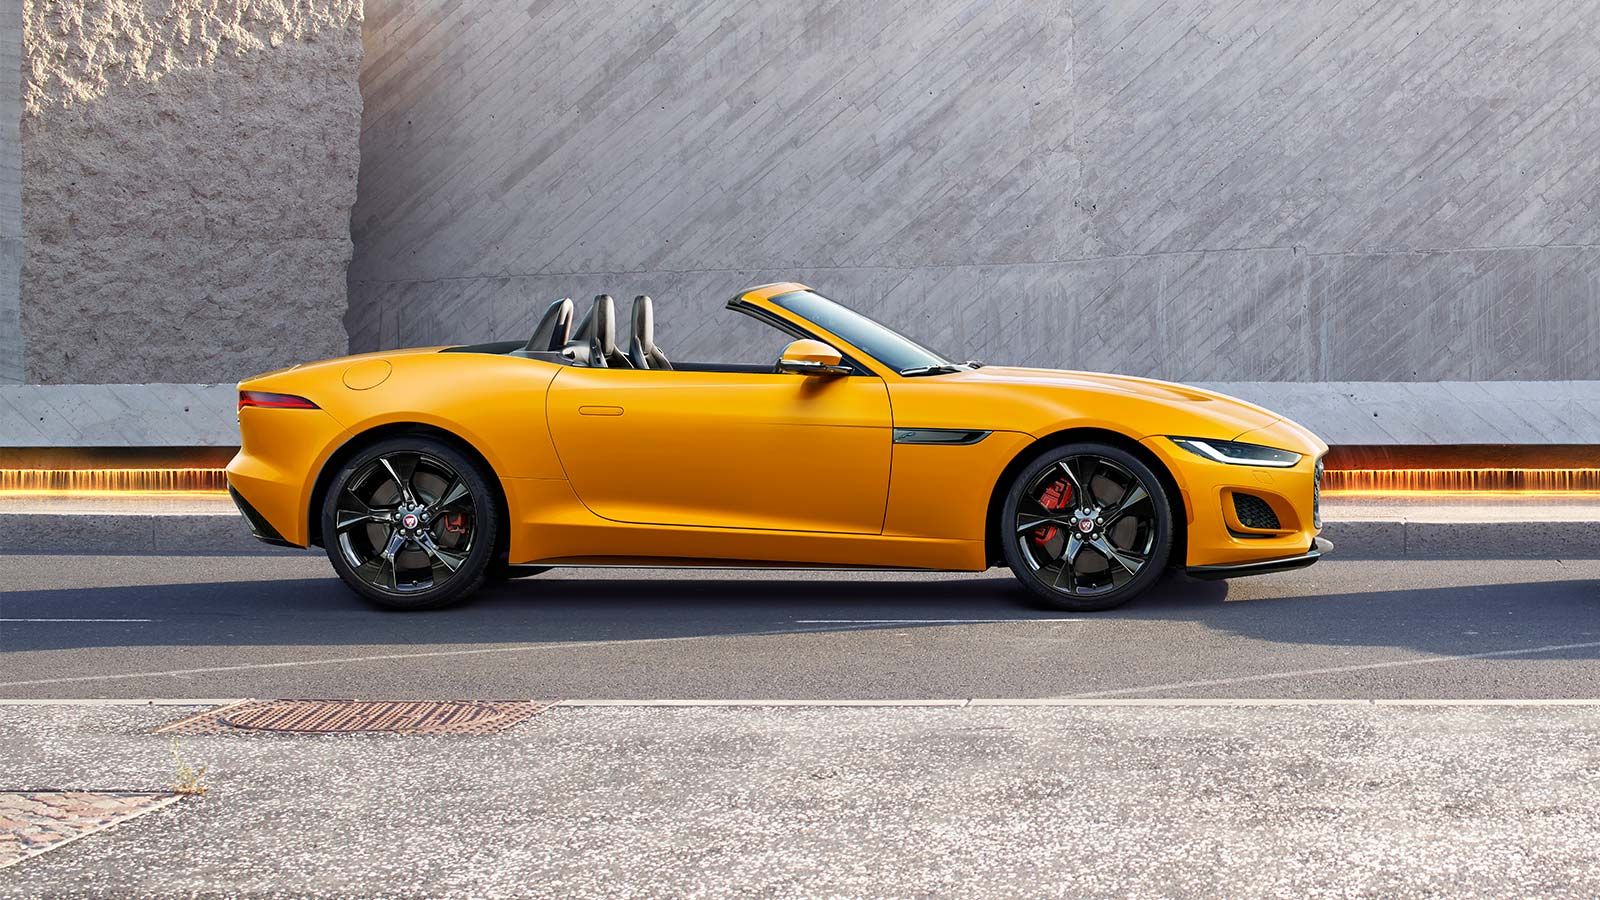 2021 Jaguar F-Type Convertible Yellow Parked